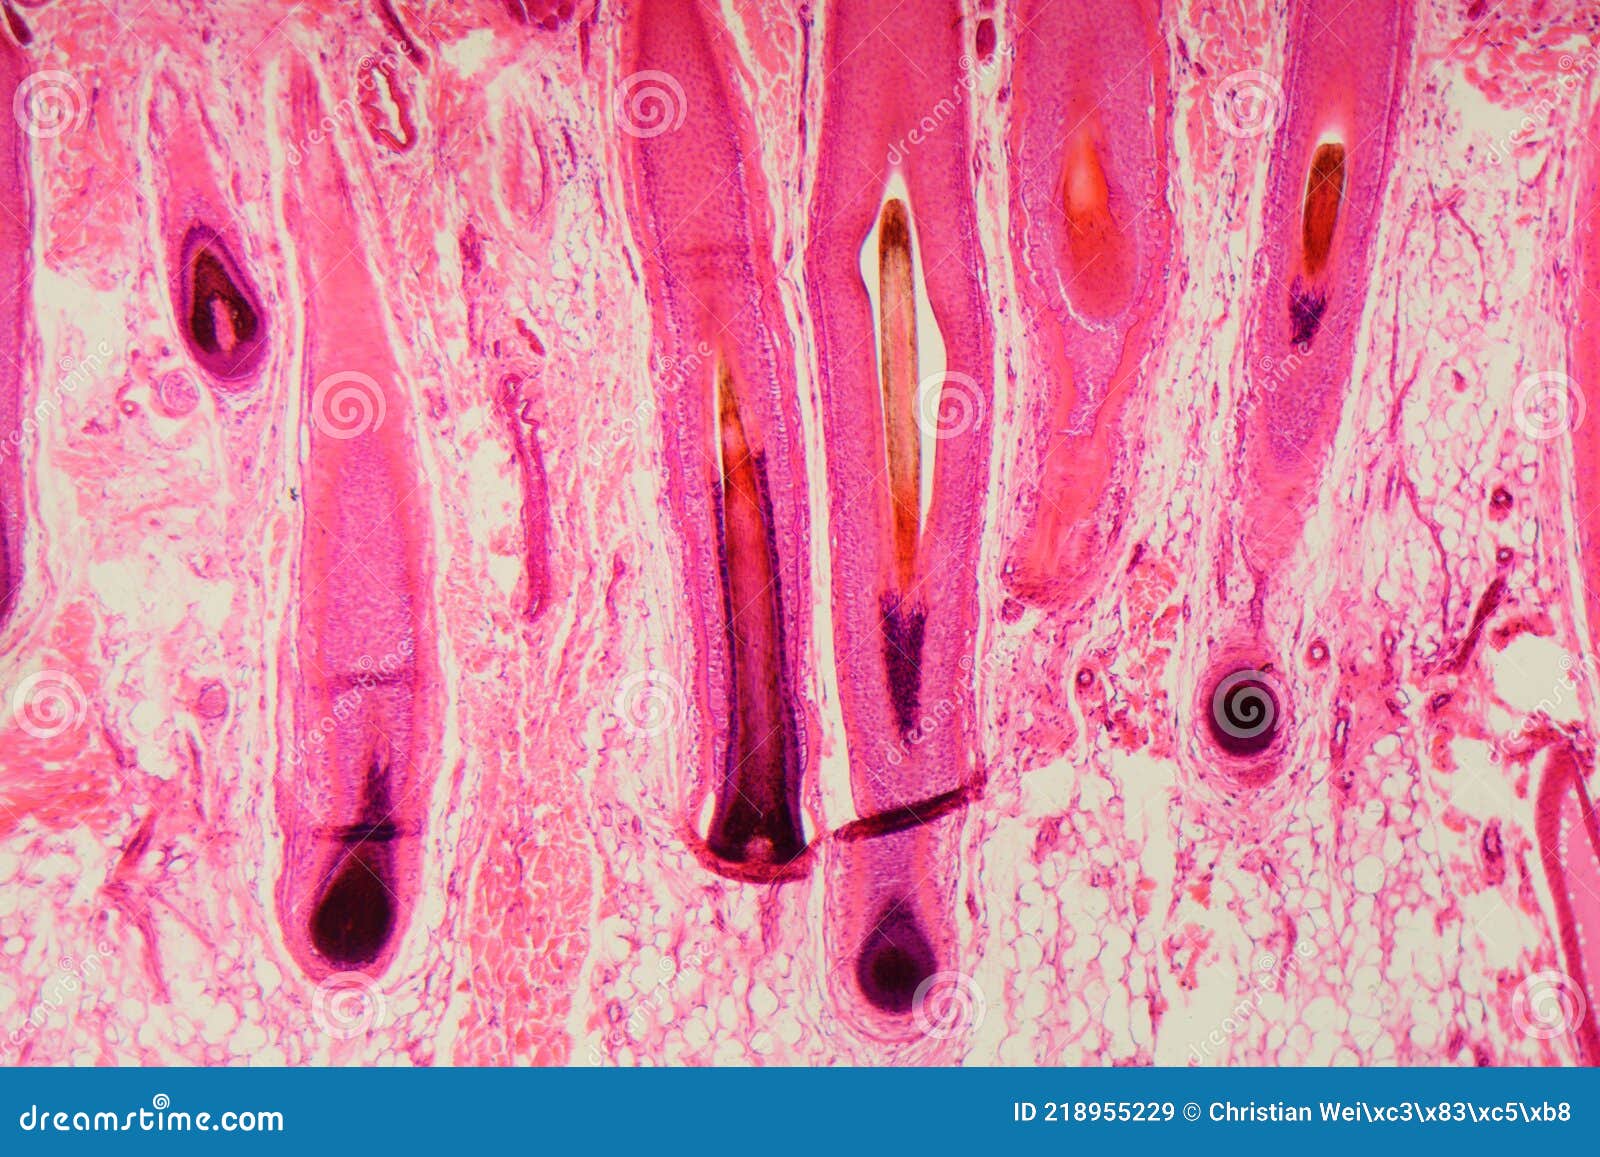 Human Hair Follicle in Skin Under the Microscope Stock Image - Image of  skin, follicle: 218955229